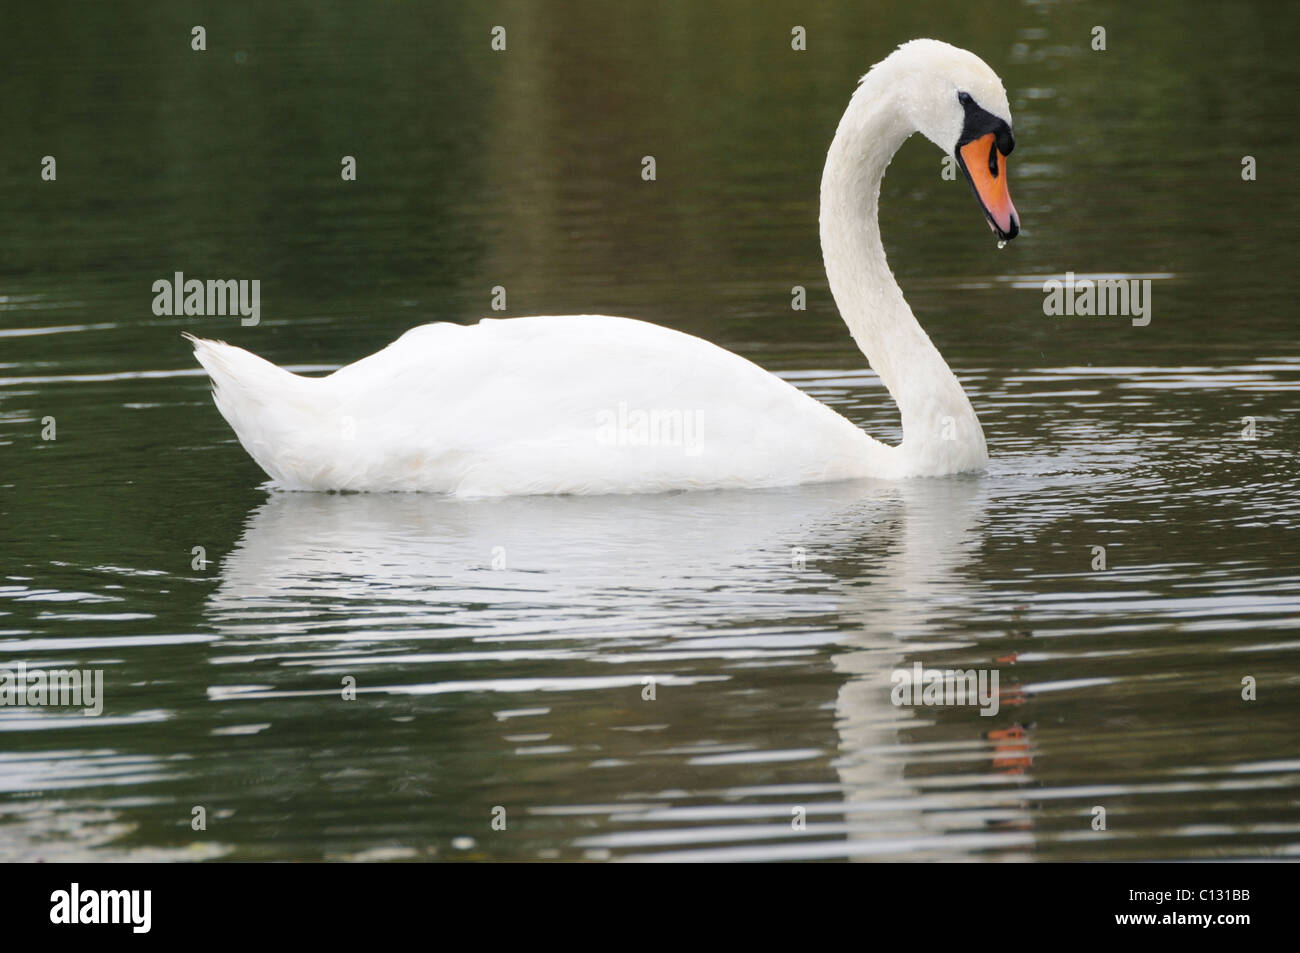 Swan swimming on a lake Stock Photo